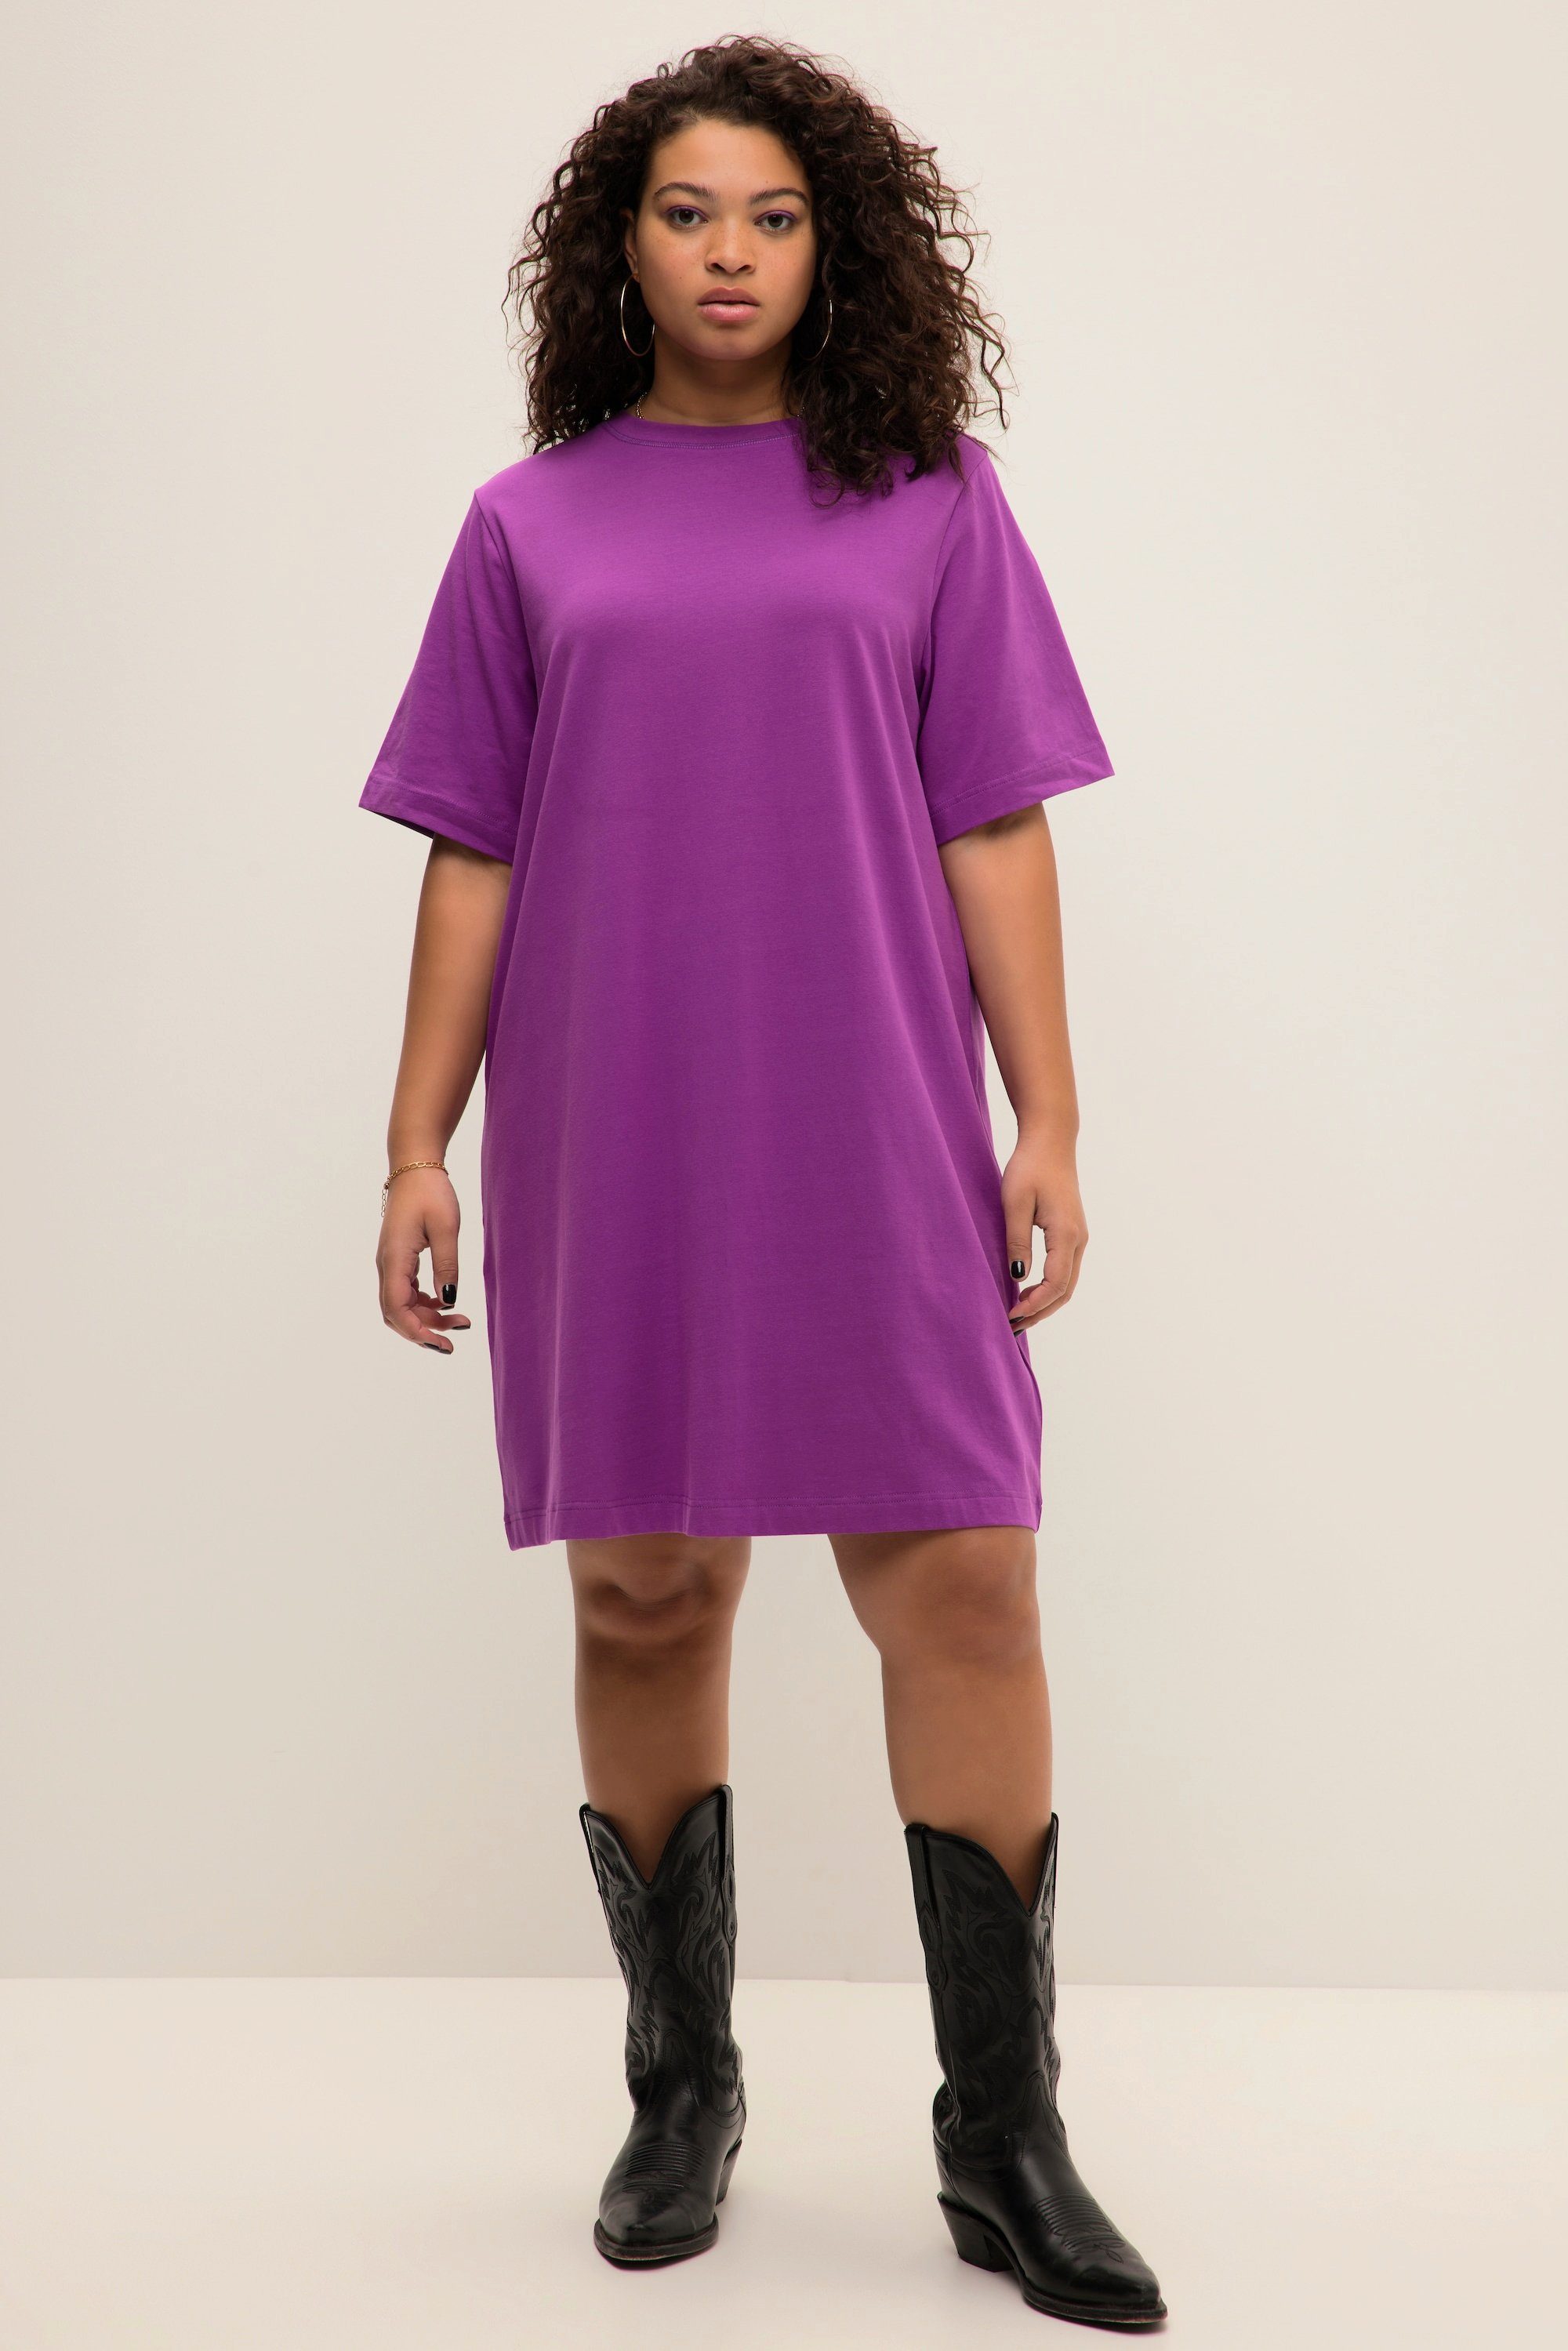 Studio Untold Longshirt Extra Longshirt Halbarm violett Oversized Rundhals